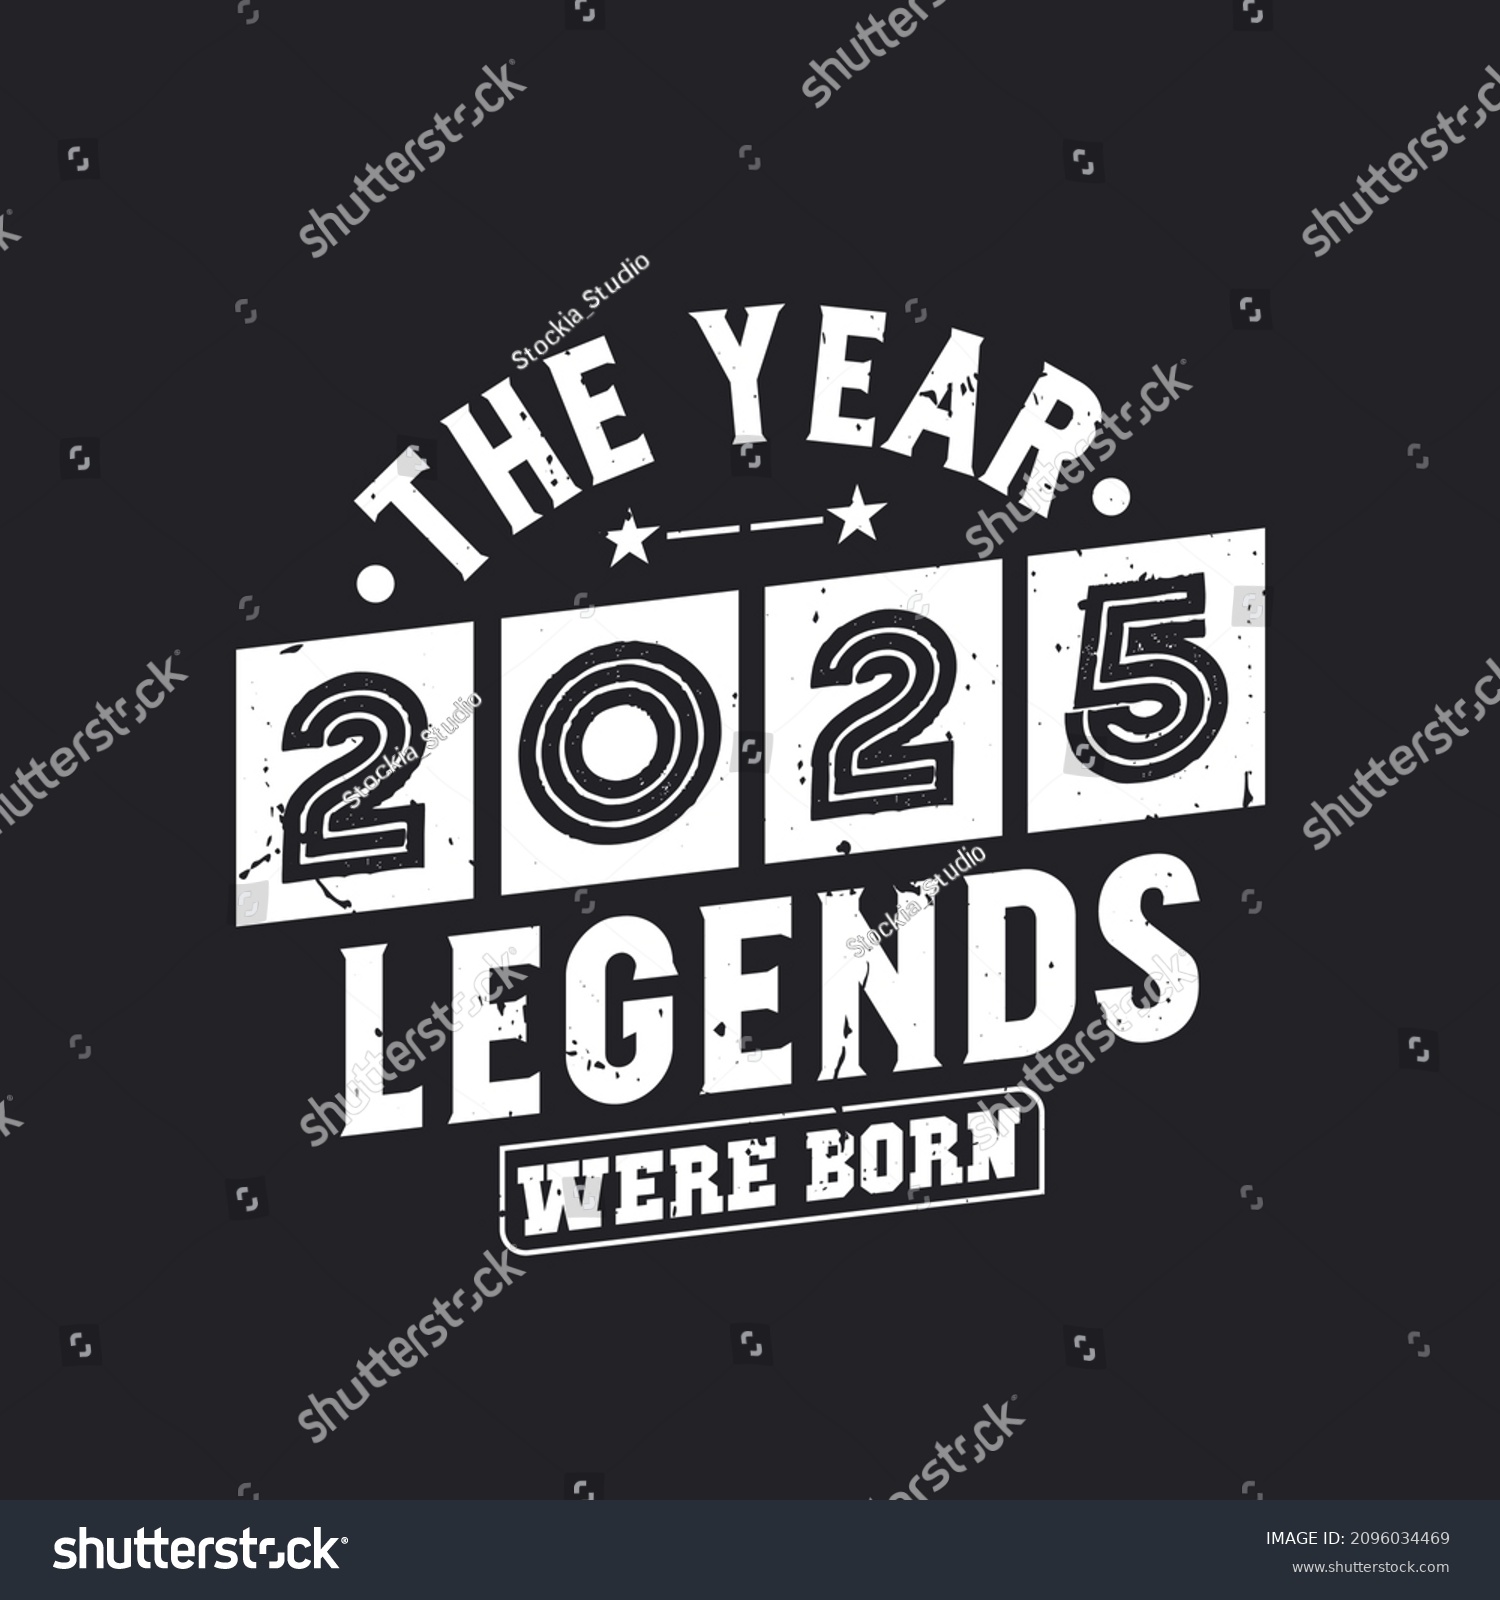 the-year-2025-legends-were-born-royalty-free-stock-vector-2096034469-avopix